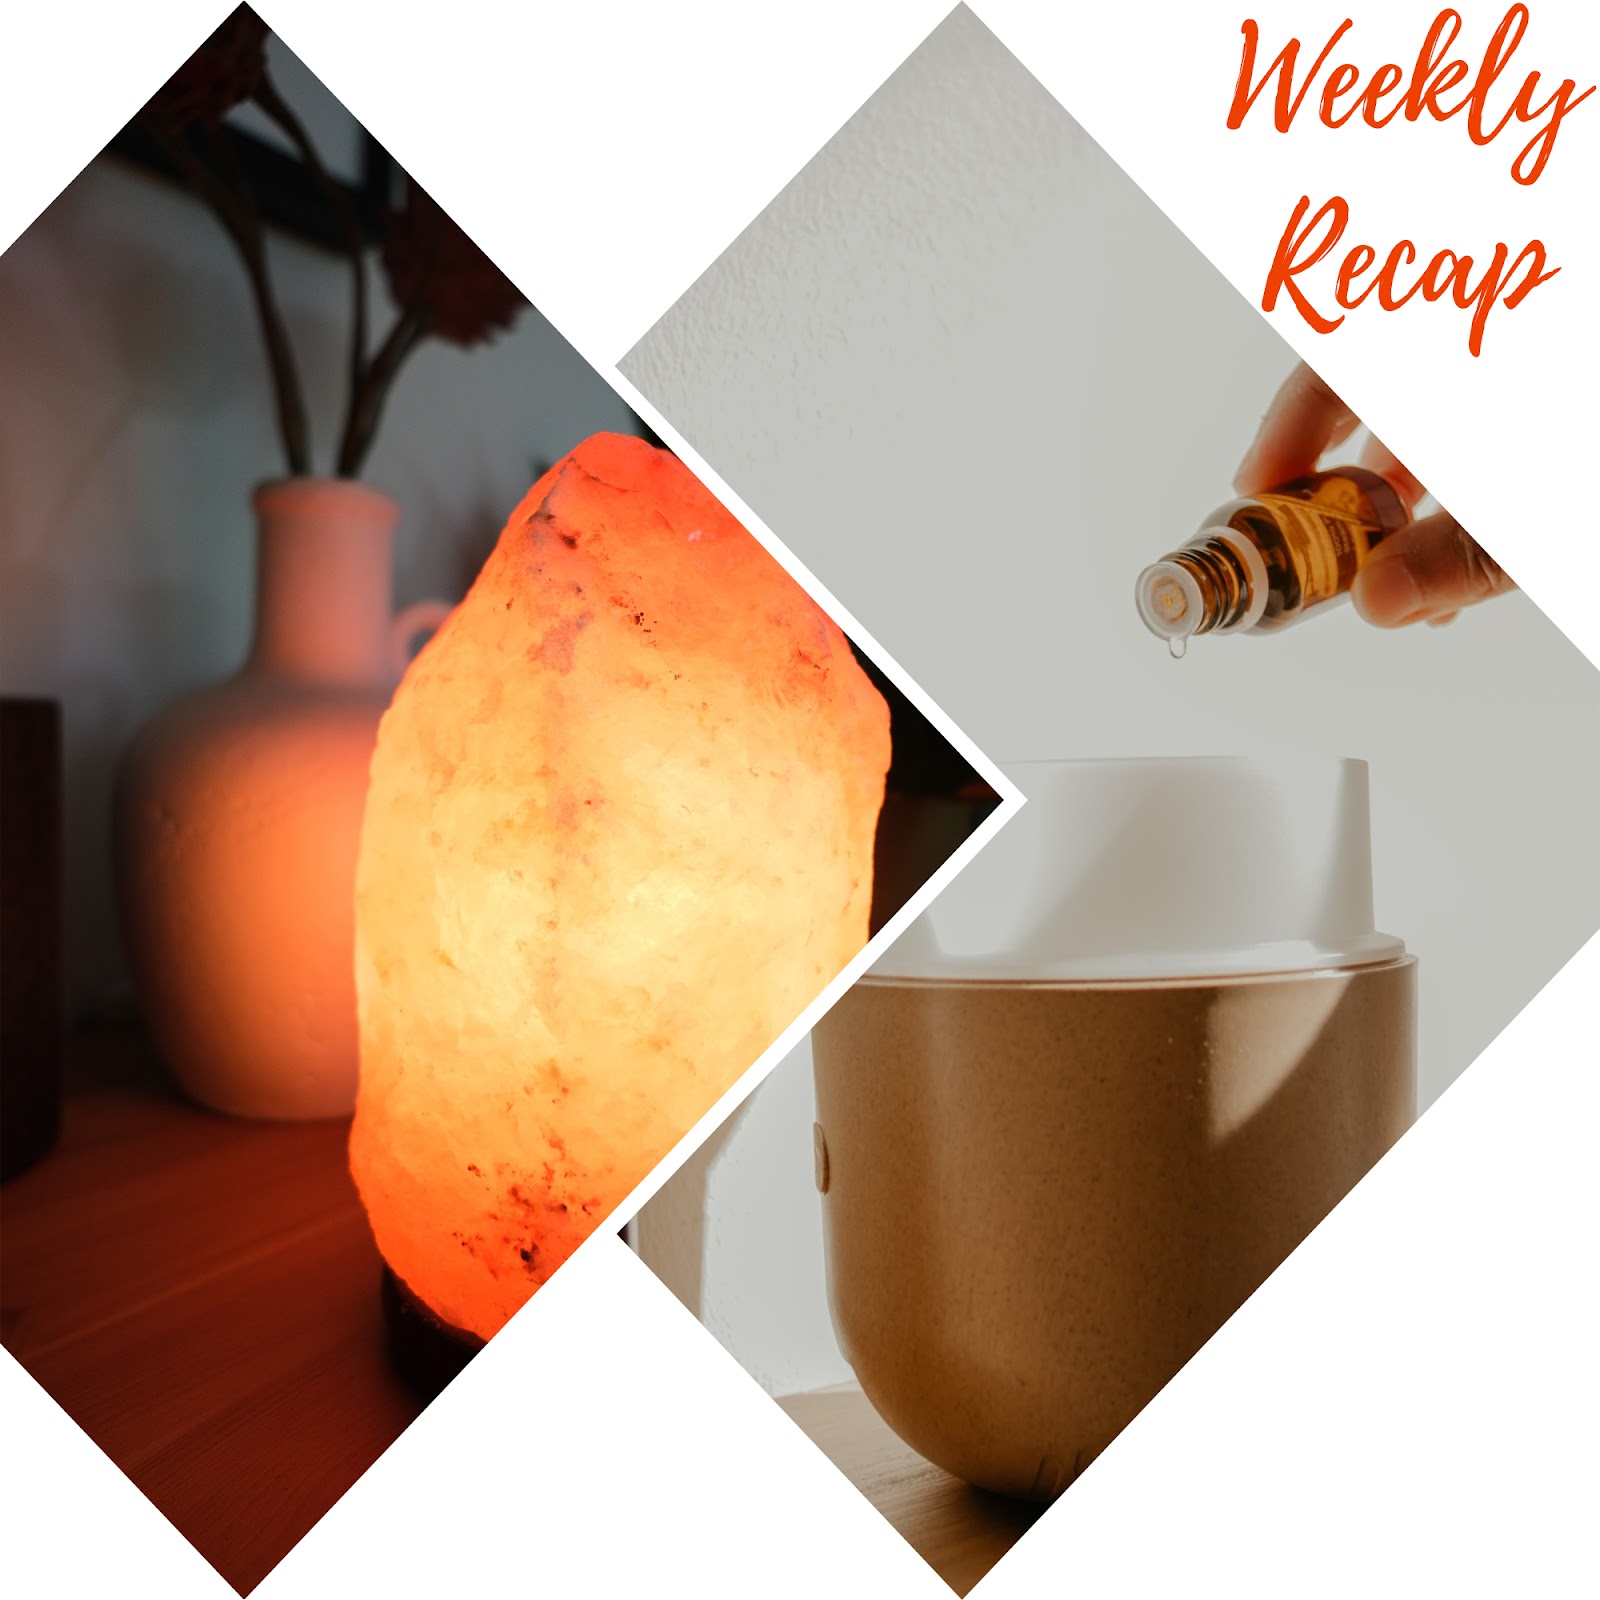 Weekly recap 22 -28 November 